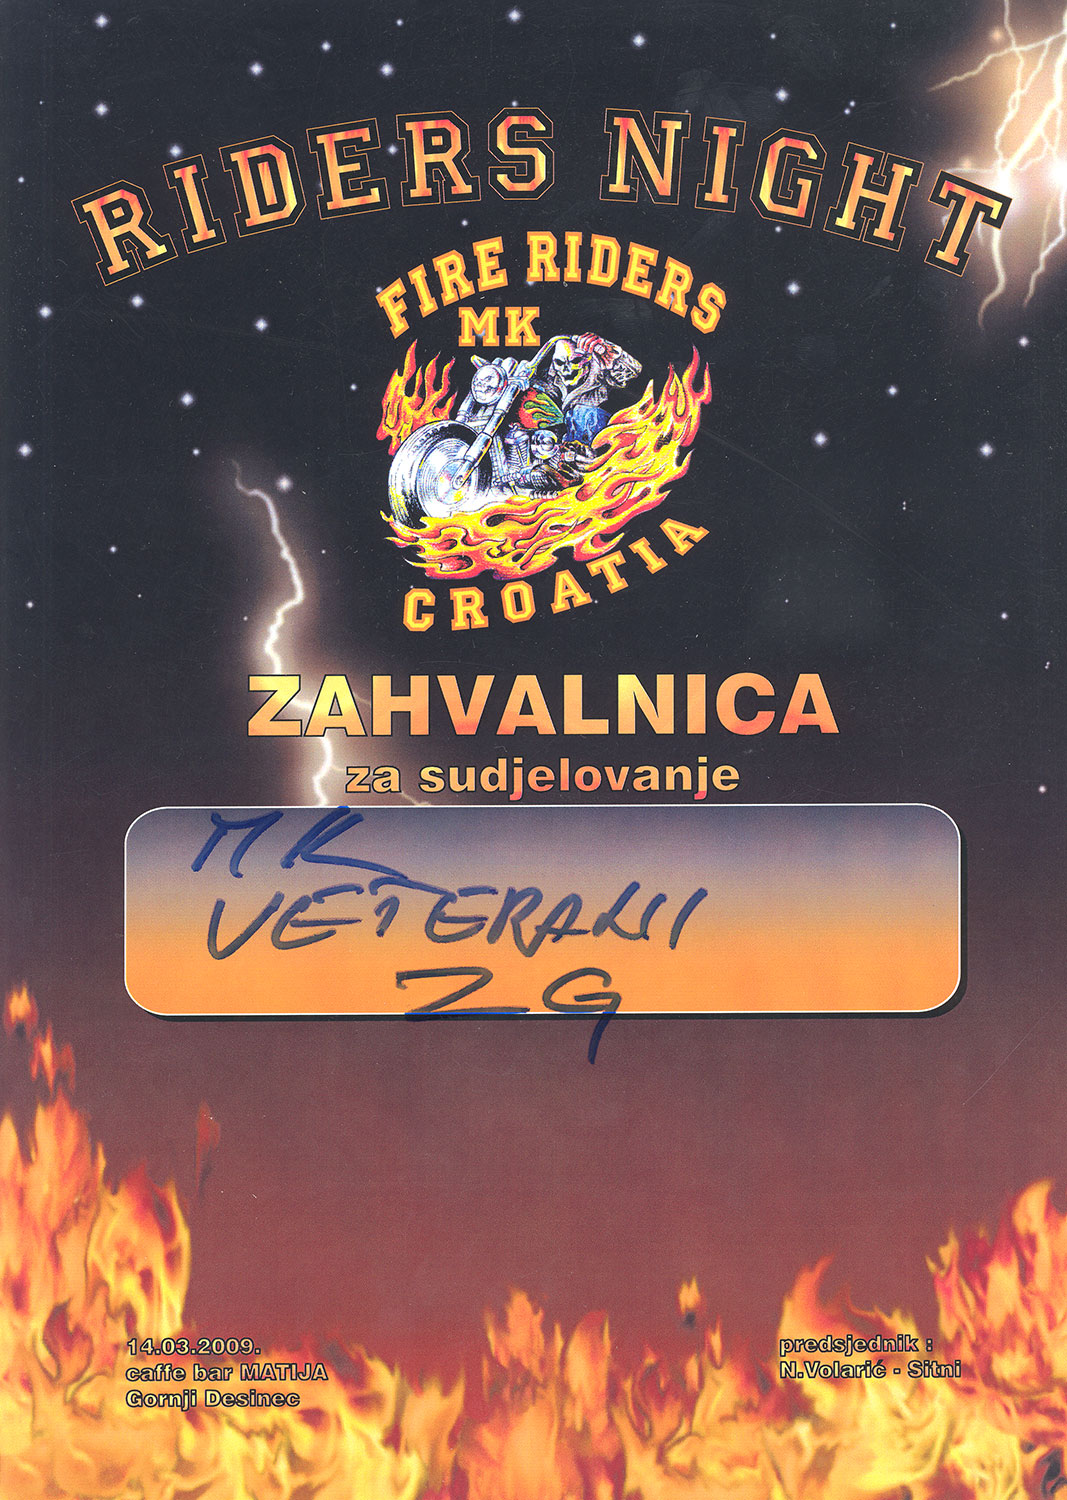 2009 03 14 mk fire riders